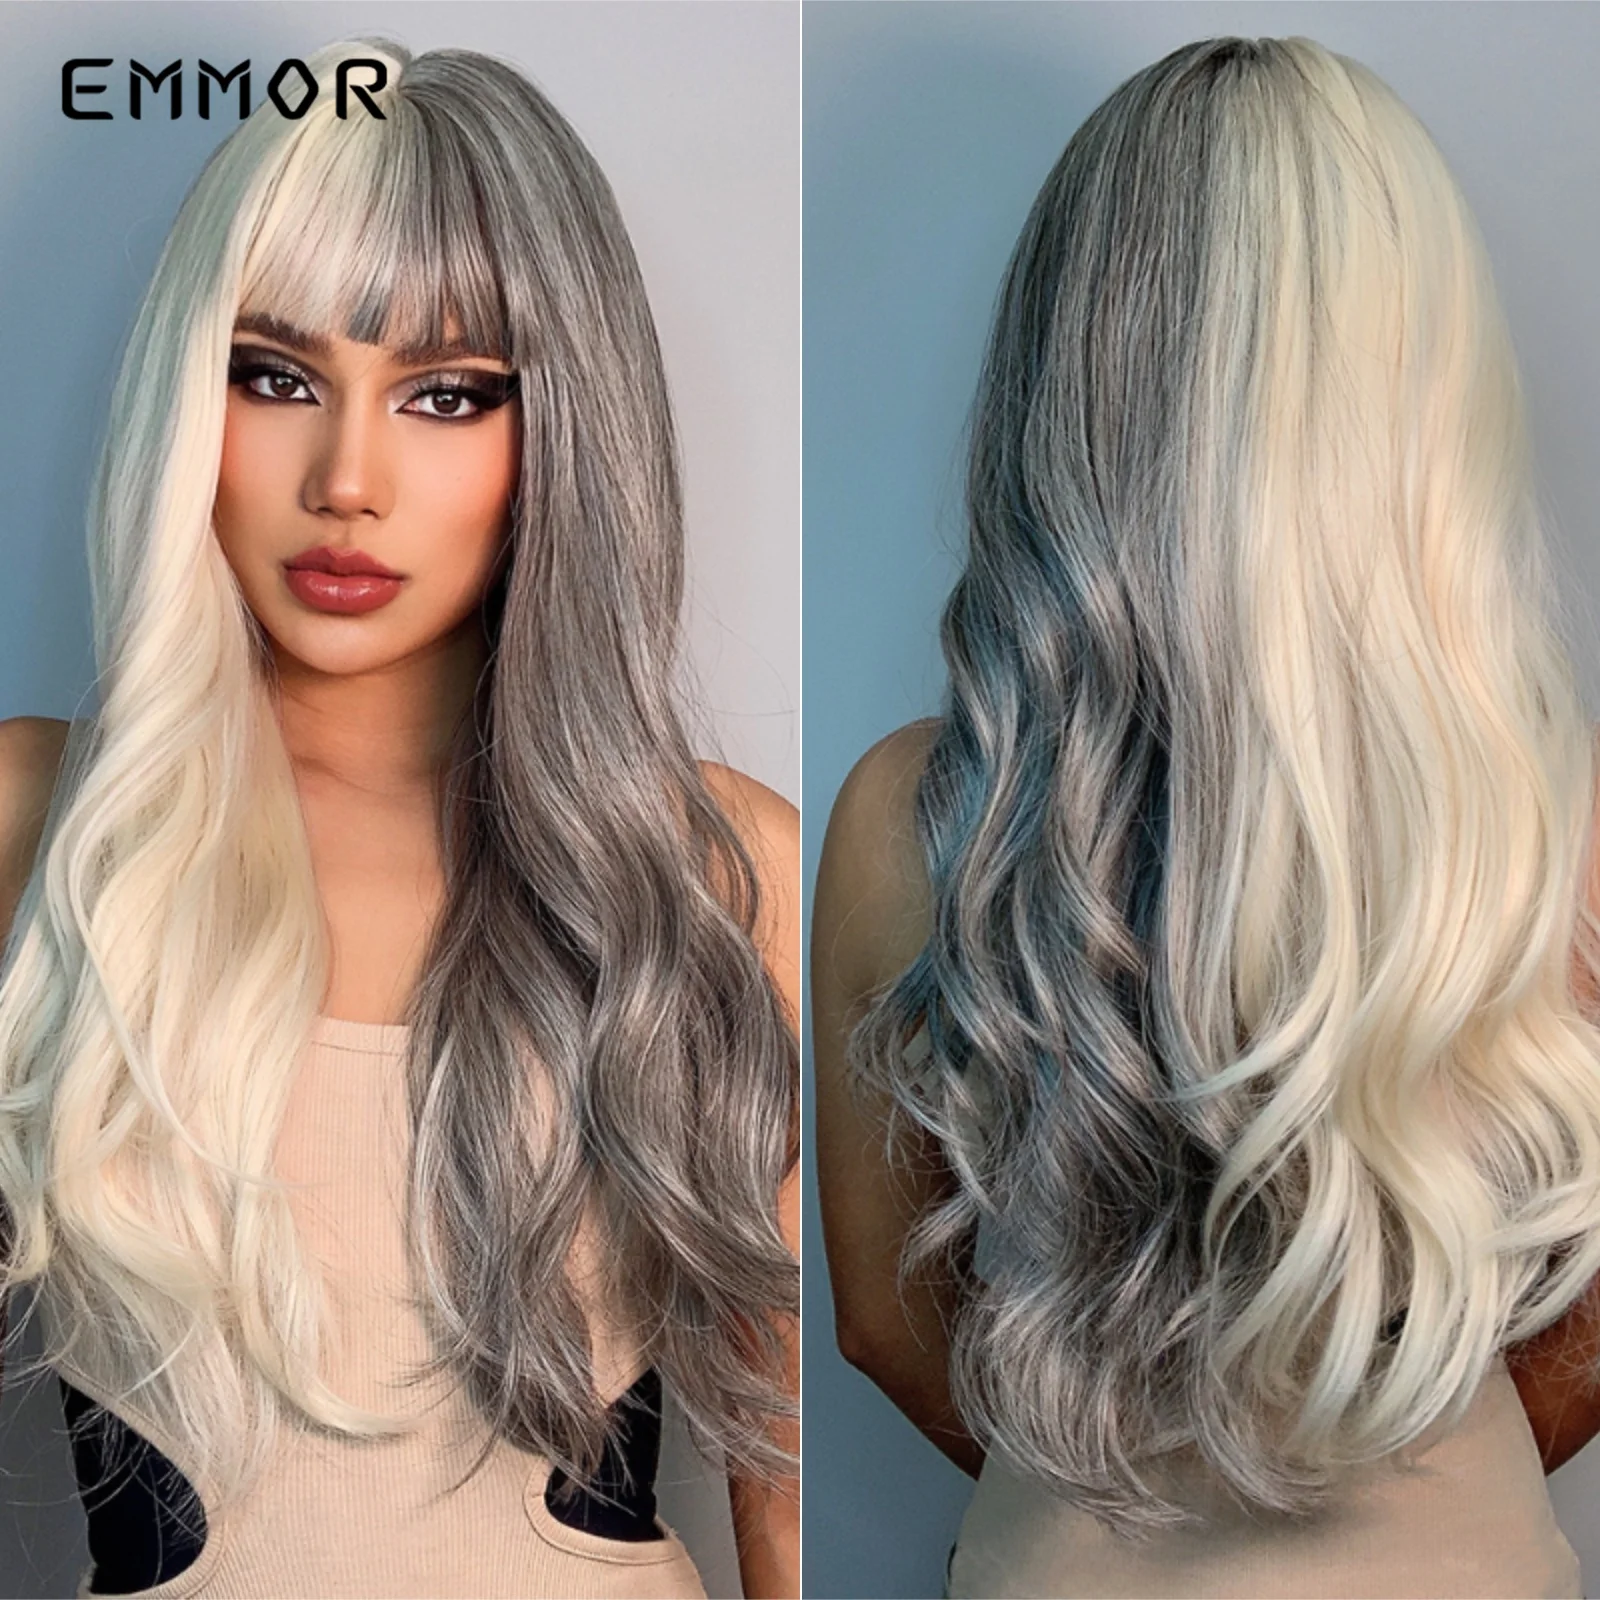 Emmor Cosplay Wigs Long Curly Half Platinum Blonde Half Ash Gray Halloween Party Hair Wig for Women Heat Resistant Fiber Wigs